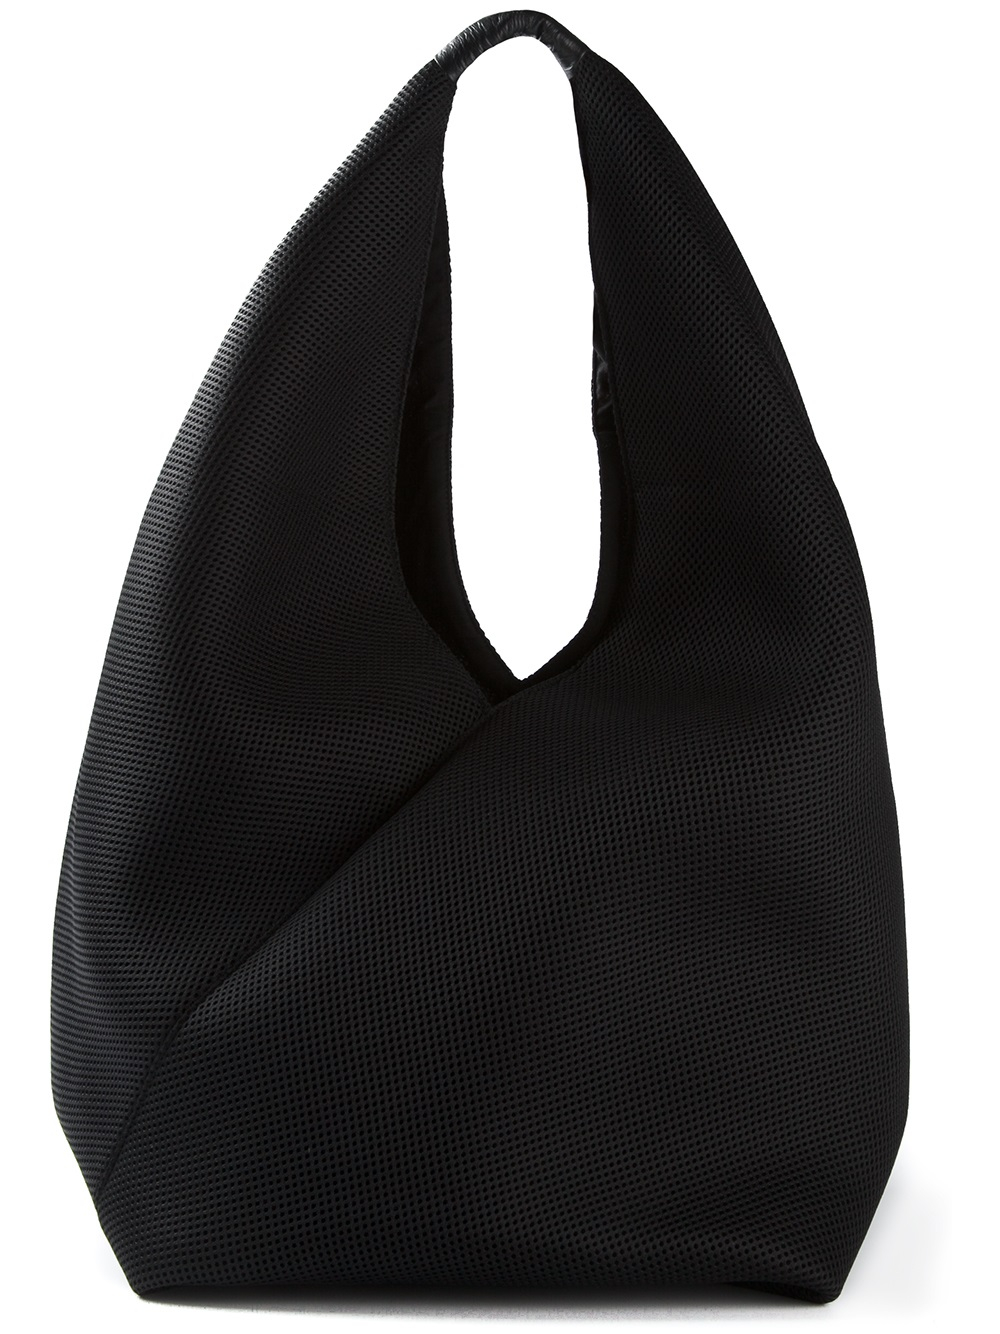 MM6 by Maison Martin Margiela Mesh Large Handbag in Black - Lyst